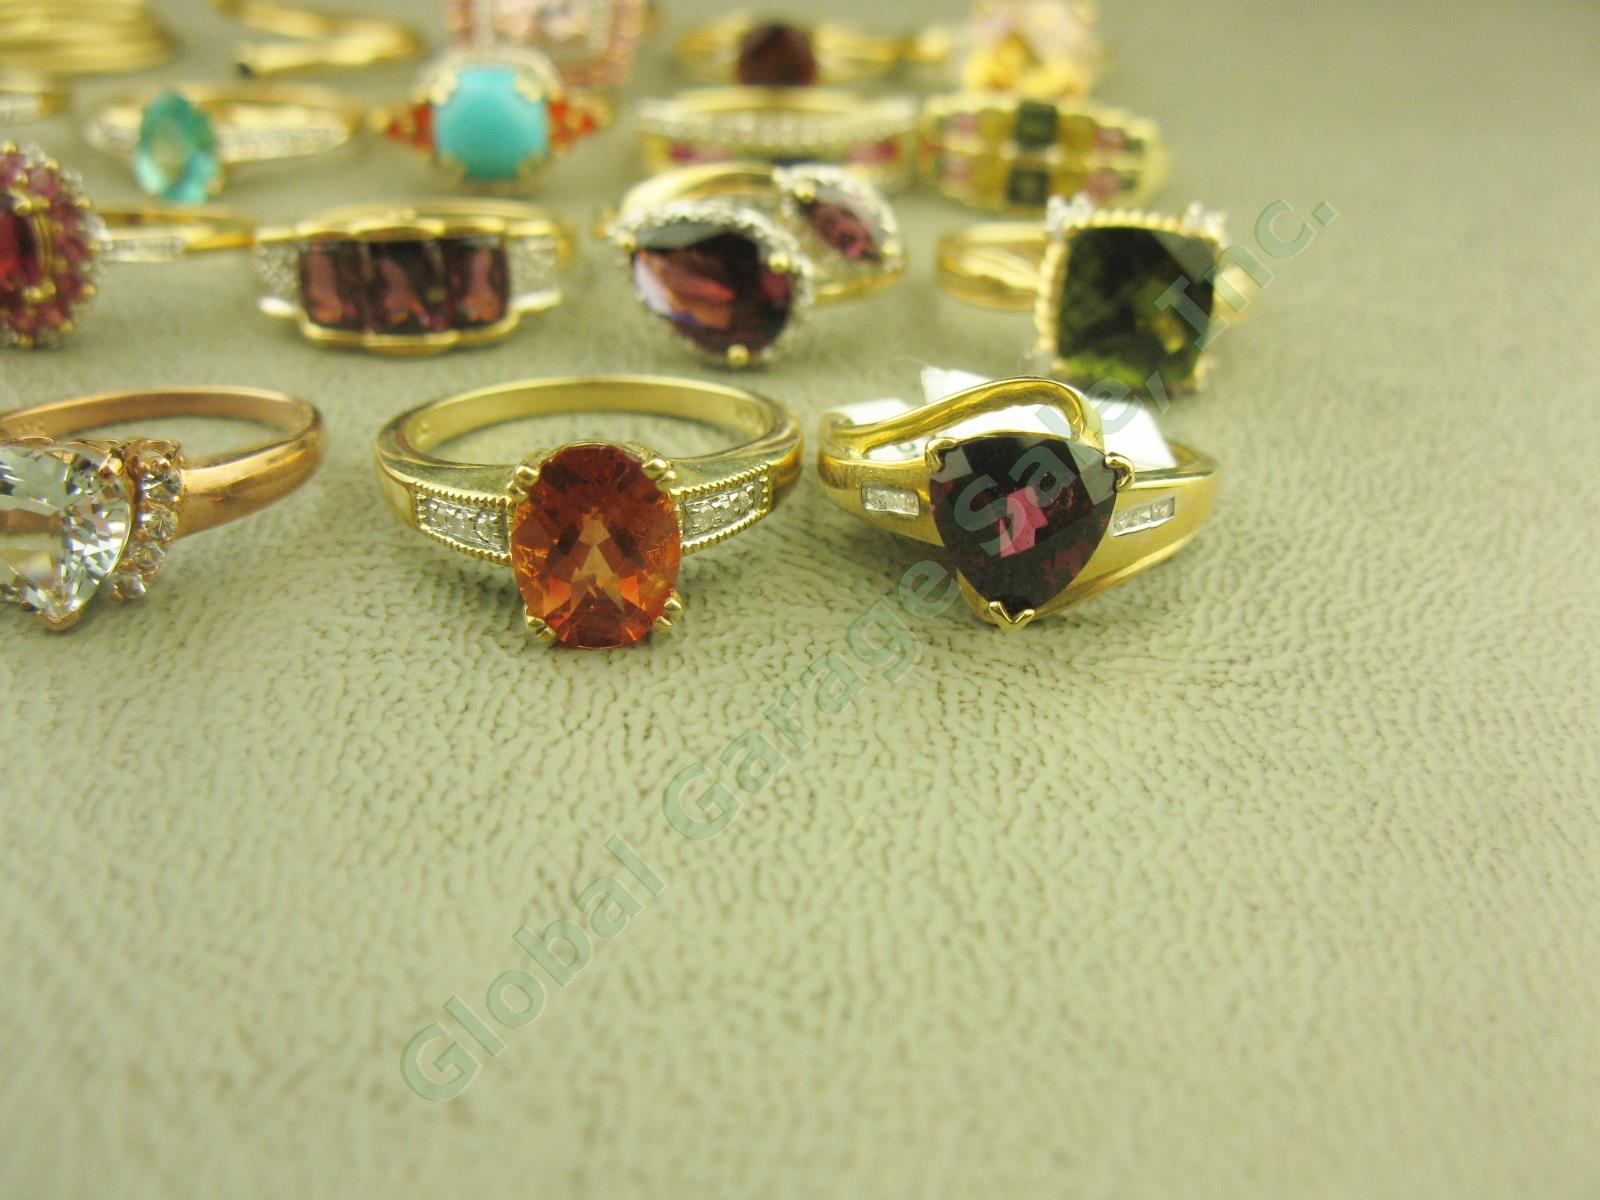 19x 14k 10k Gold Gemstone Rings Lot Earrings 57.7 Grams Not Scrap $1200+ Value!! 2